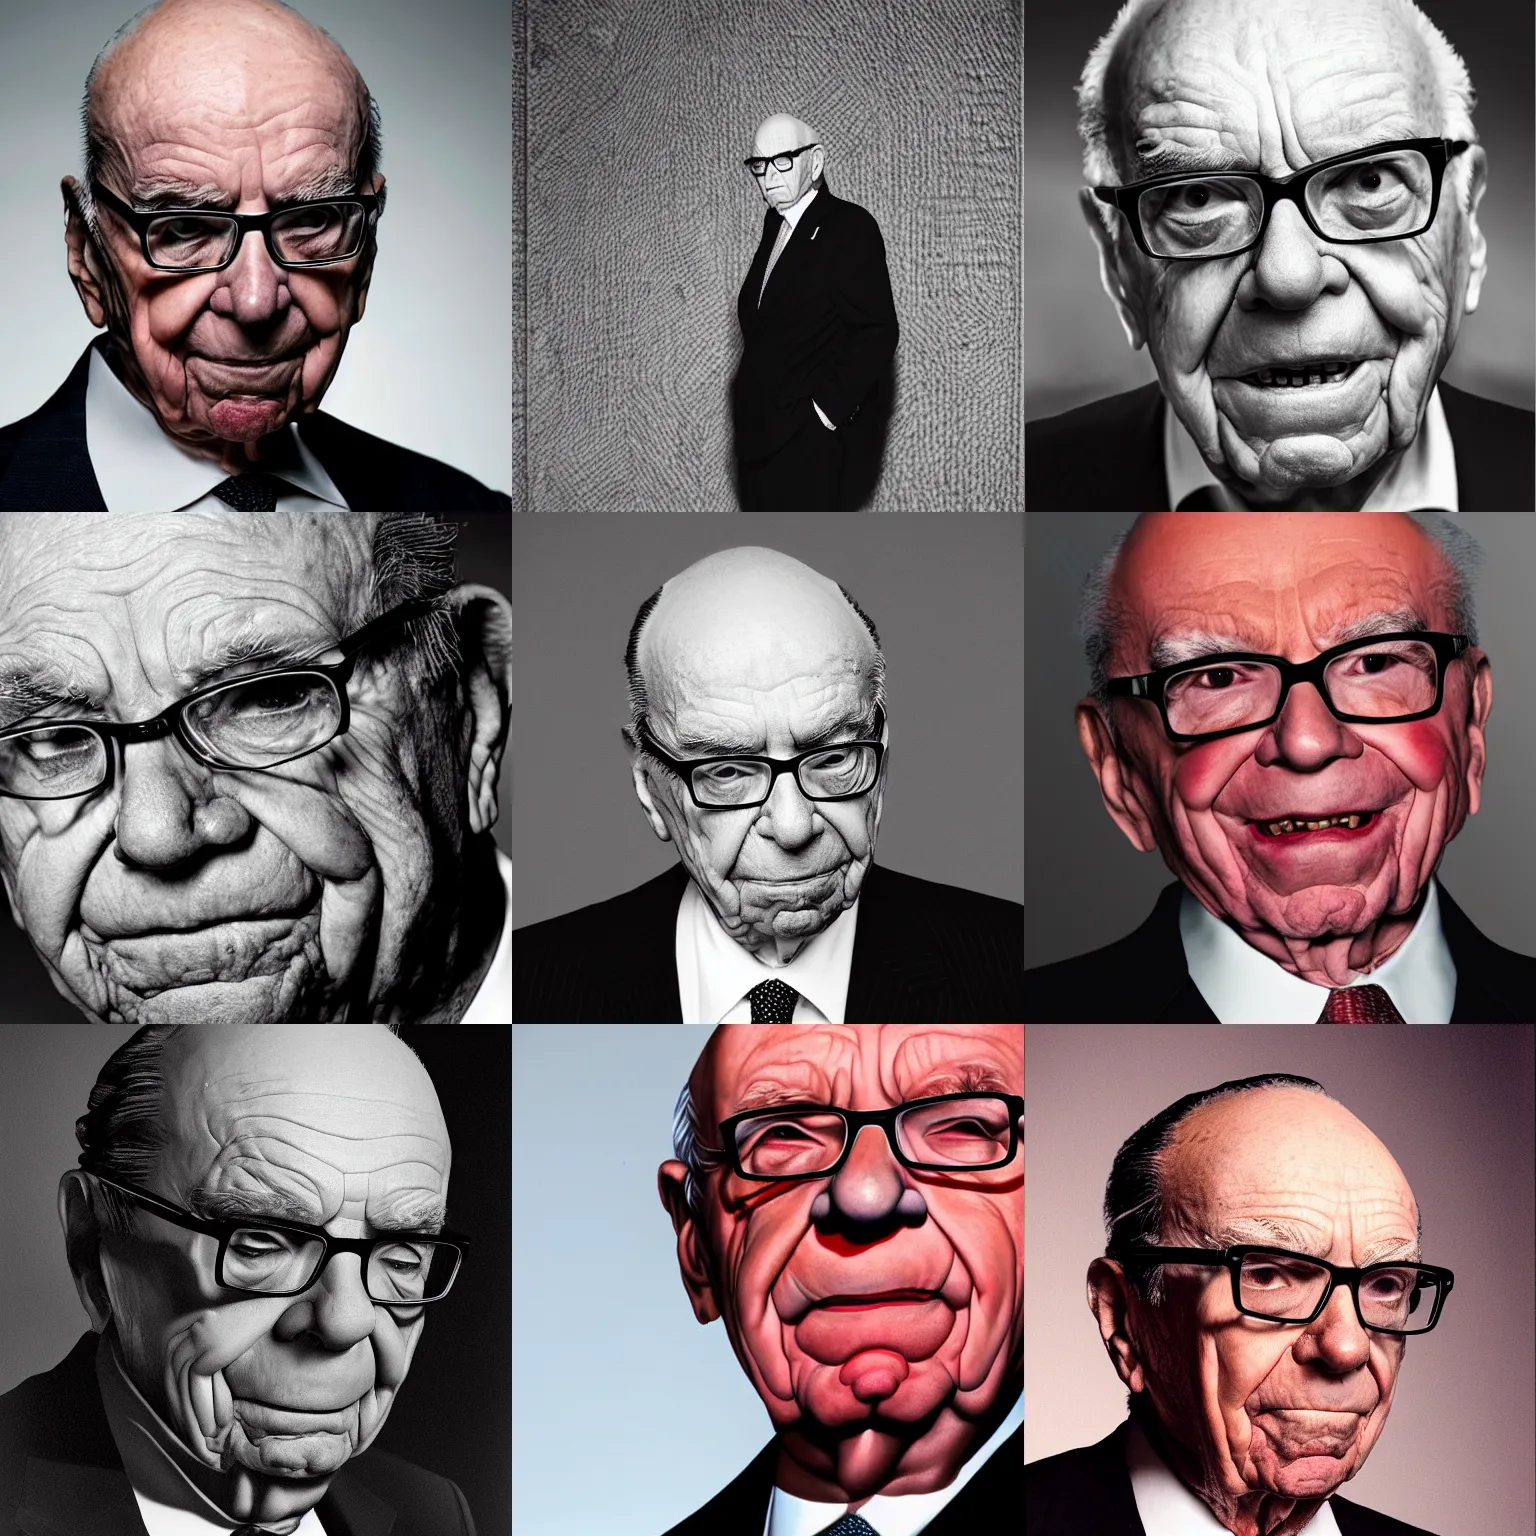 Prompt: Rupert Murdoch as the Devil, portrait photography